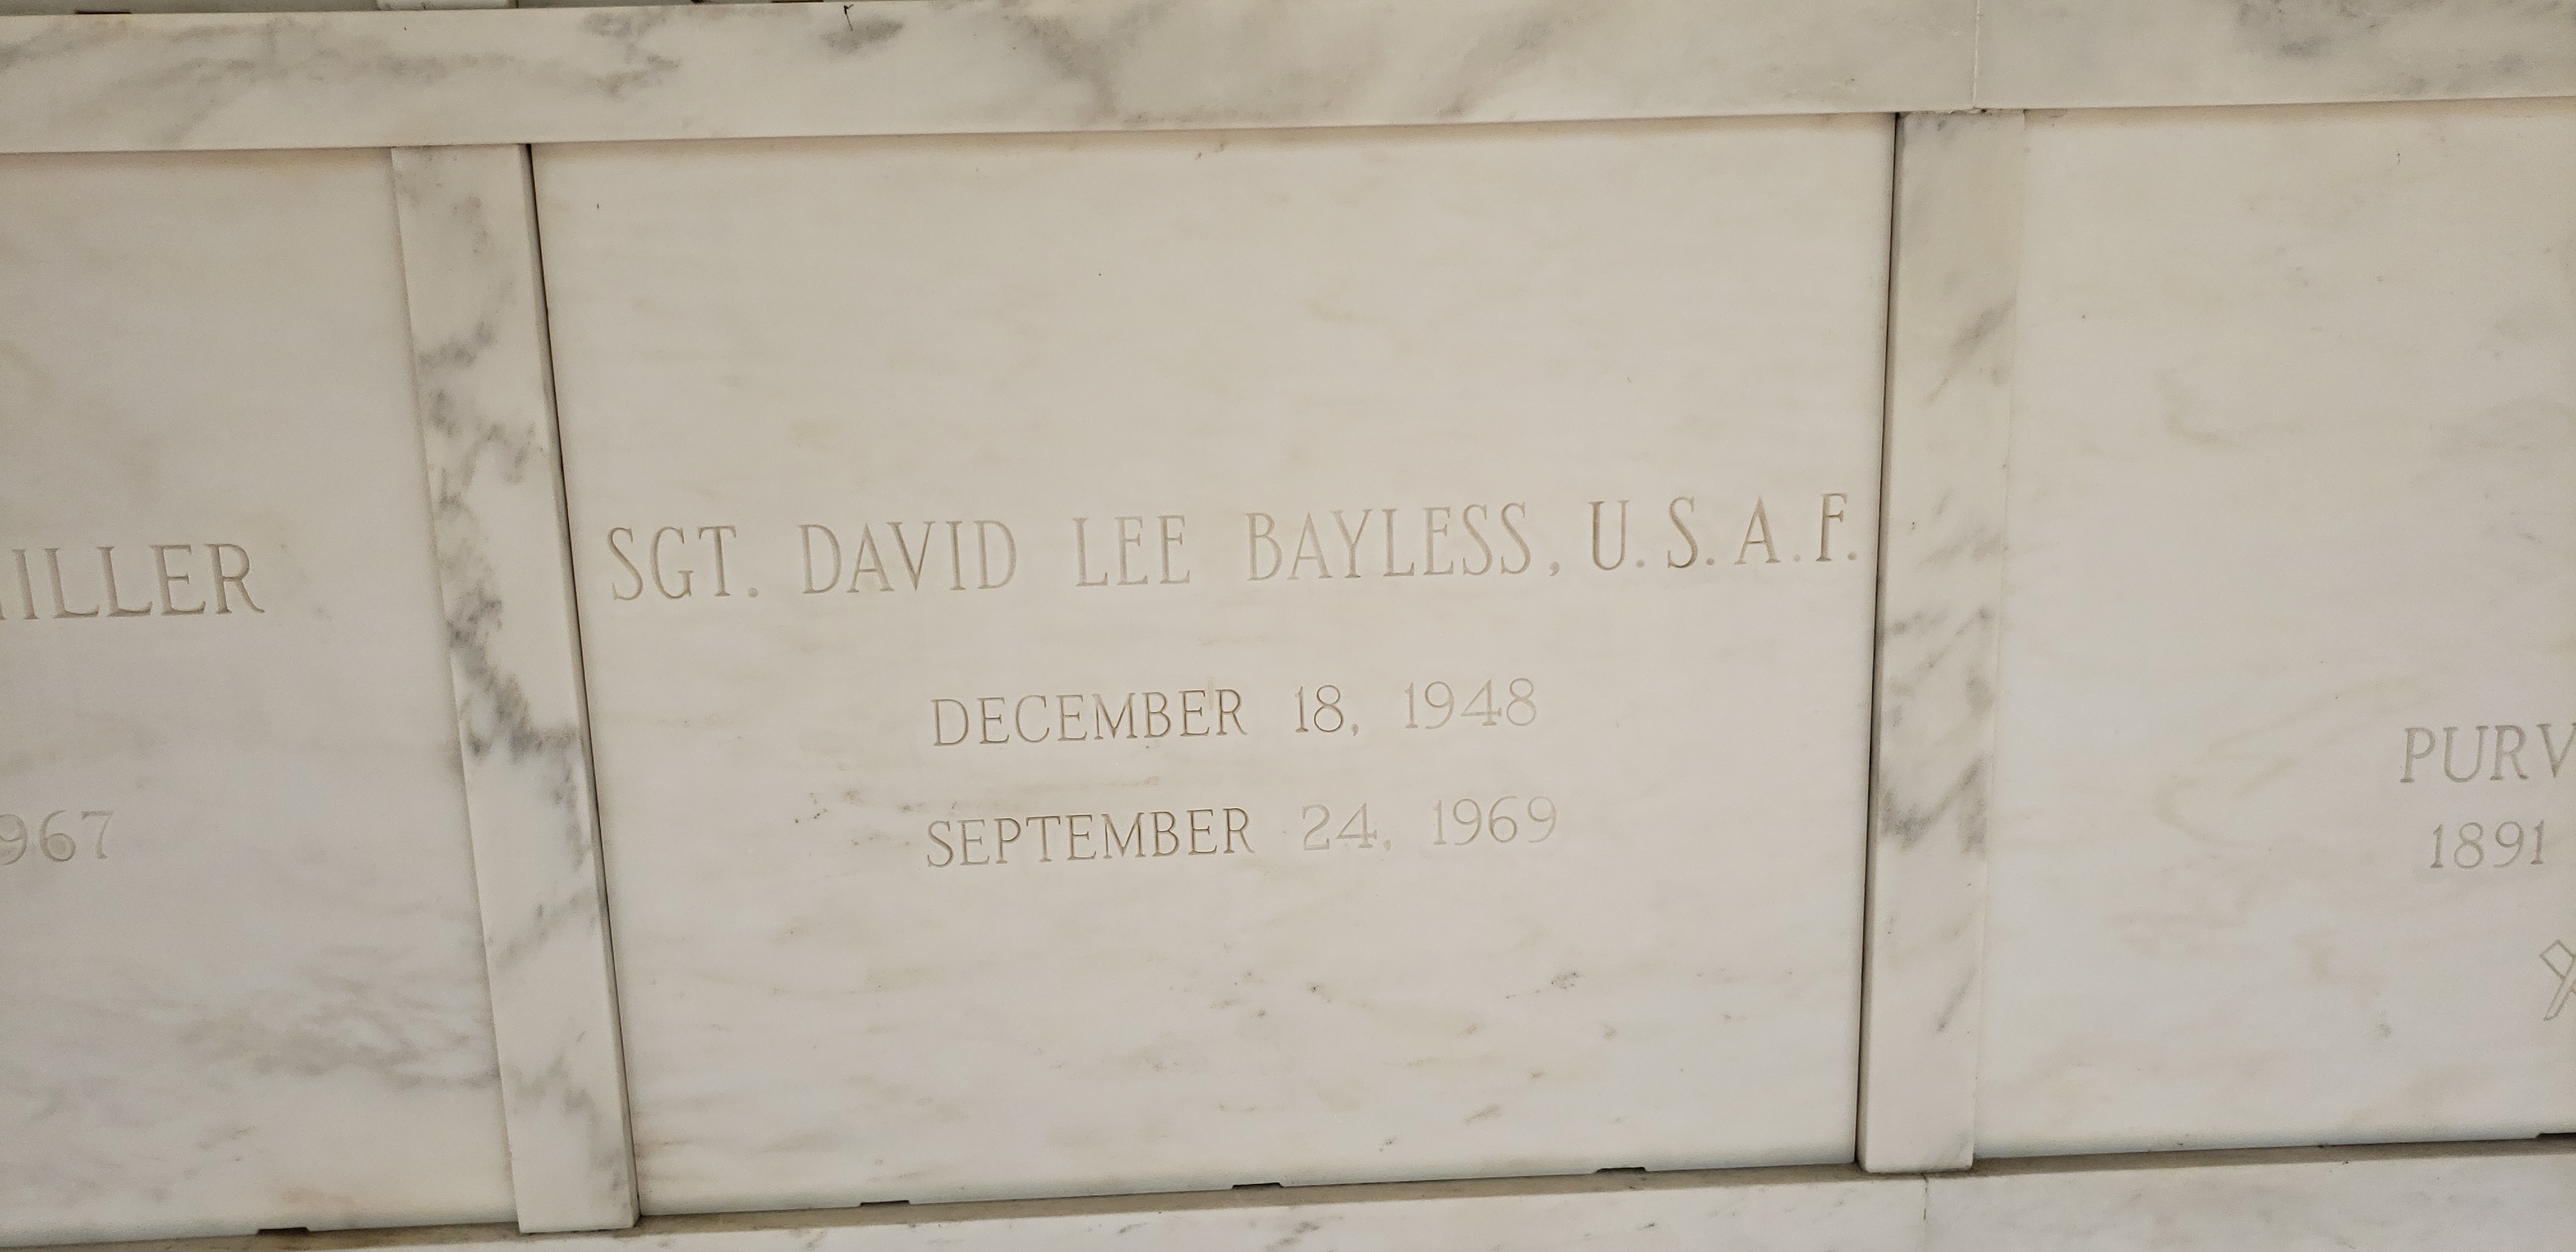 Sgt David Lee Bayless